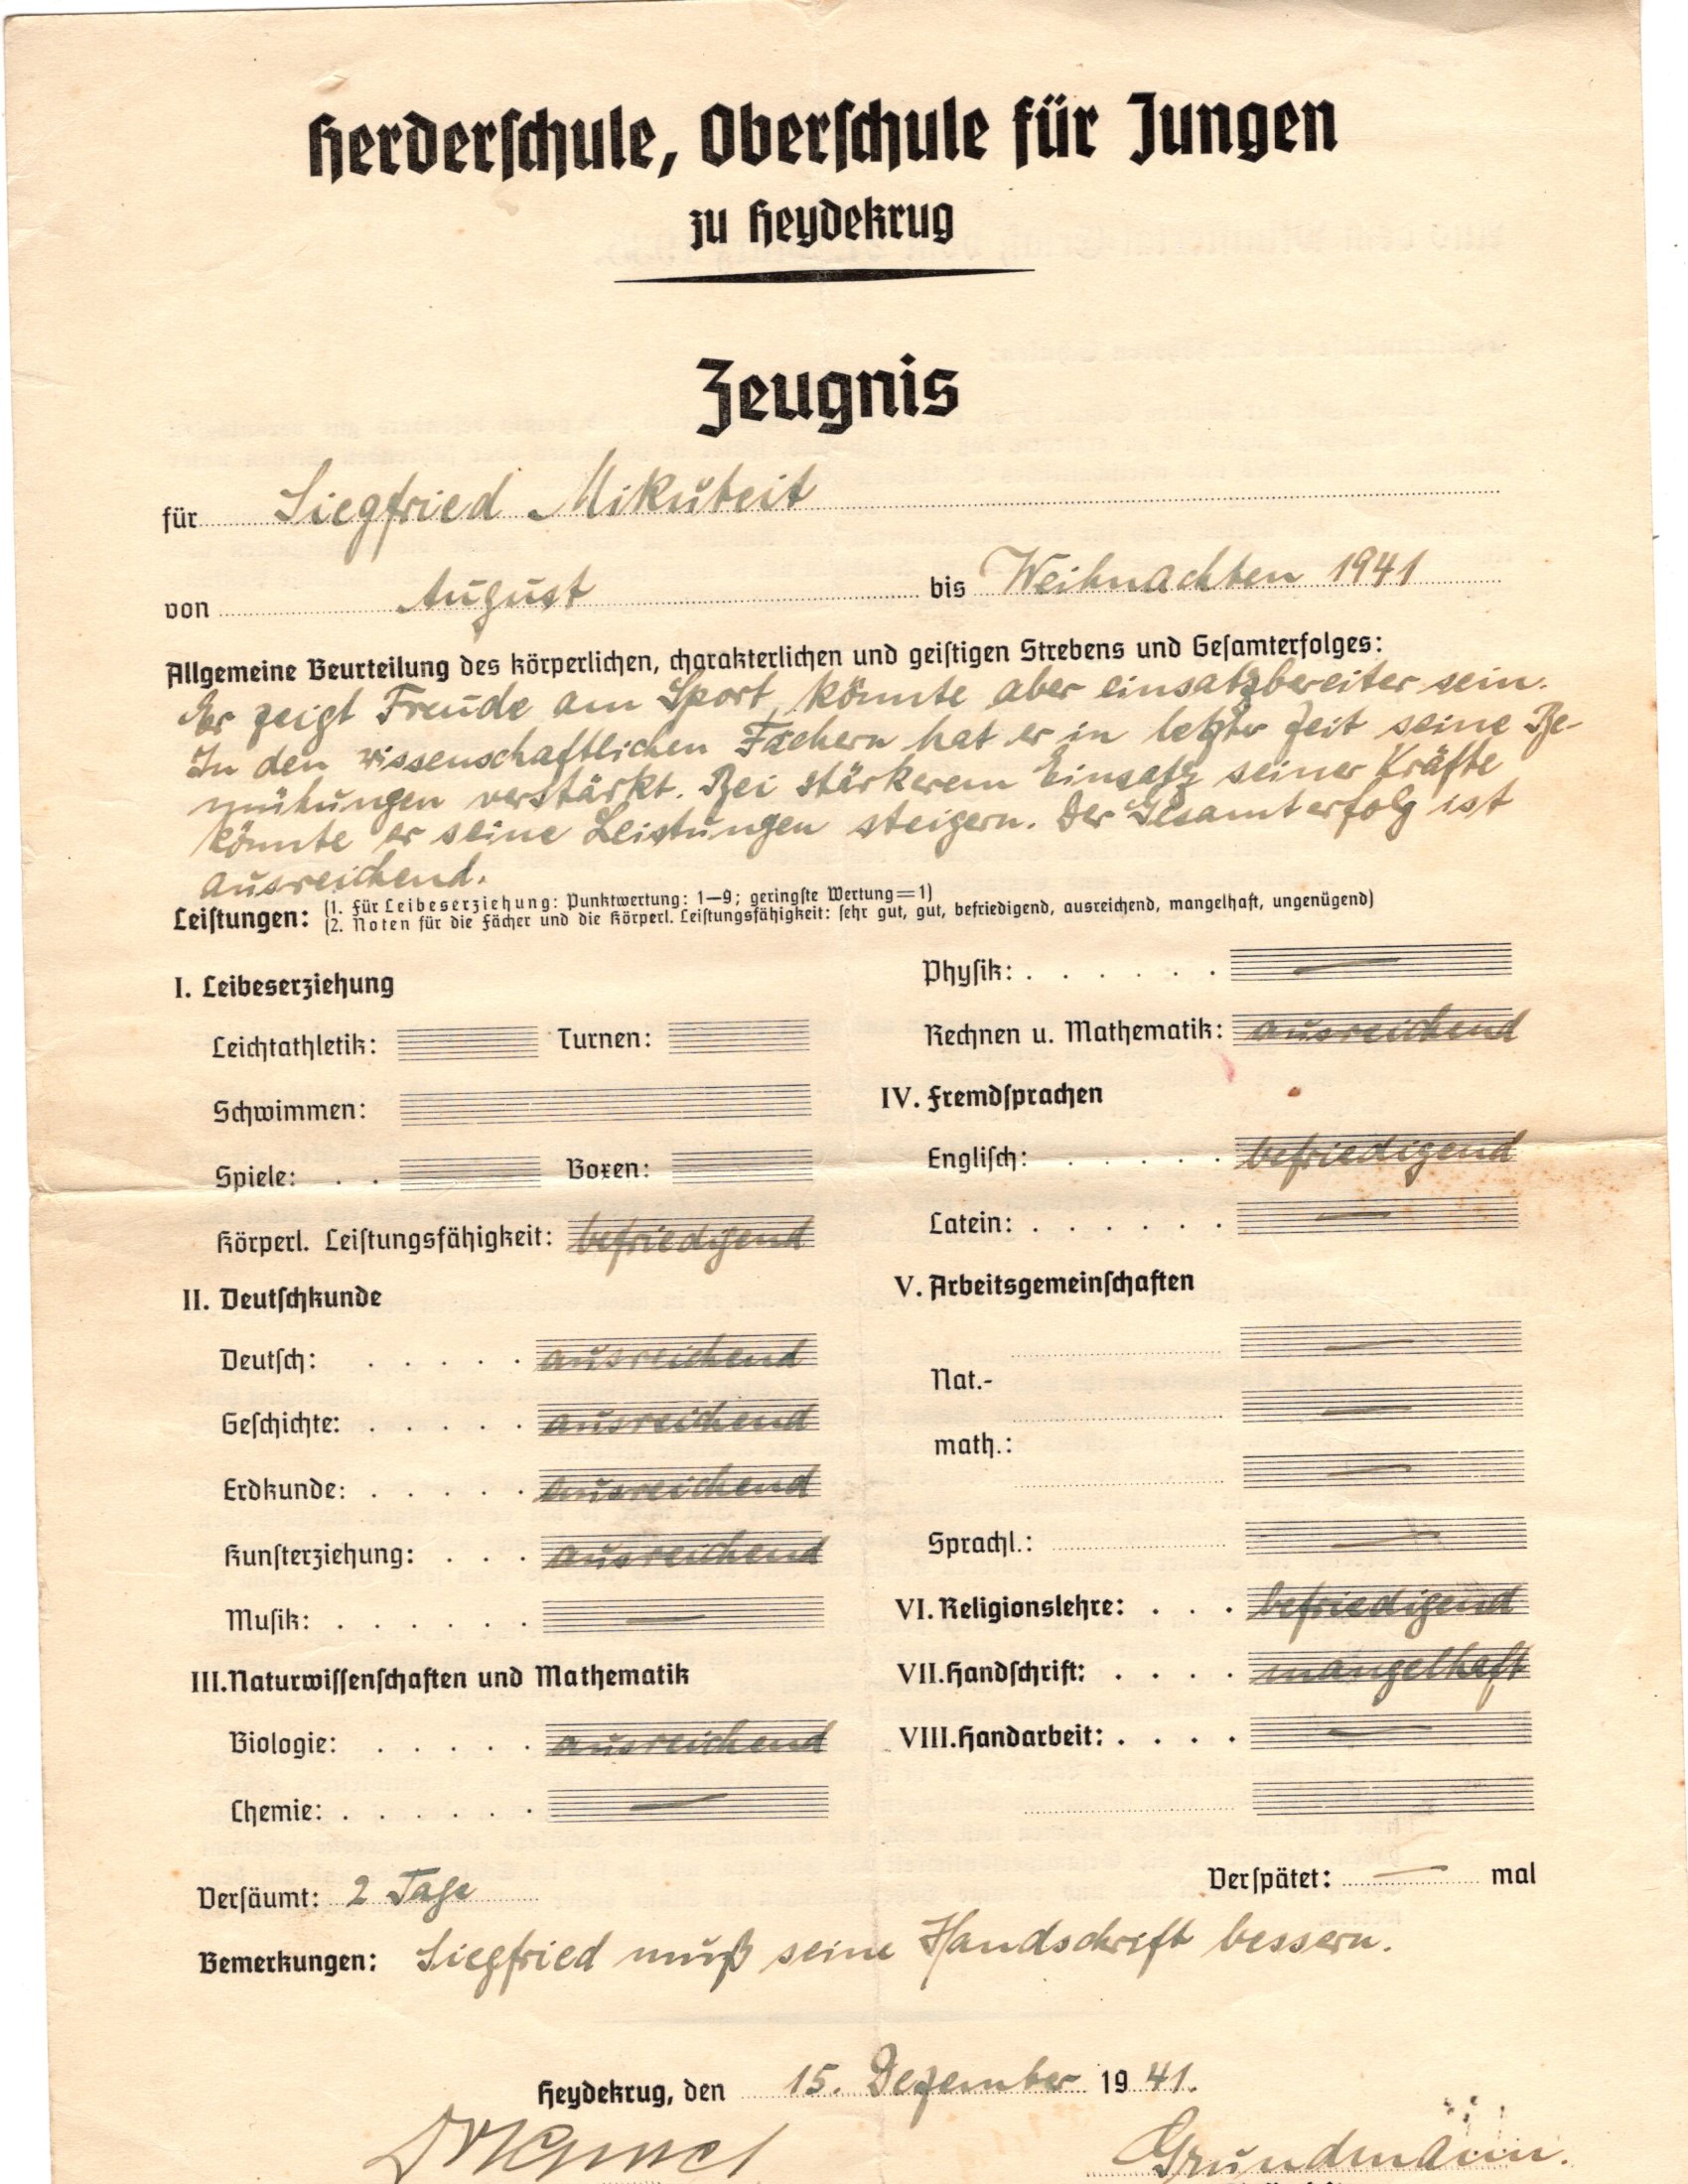 report card Weinachten 1941